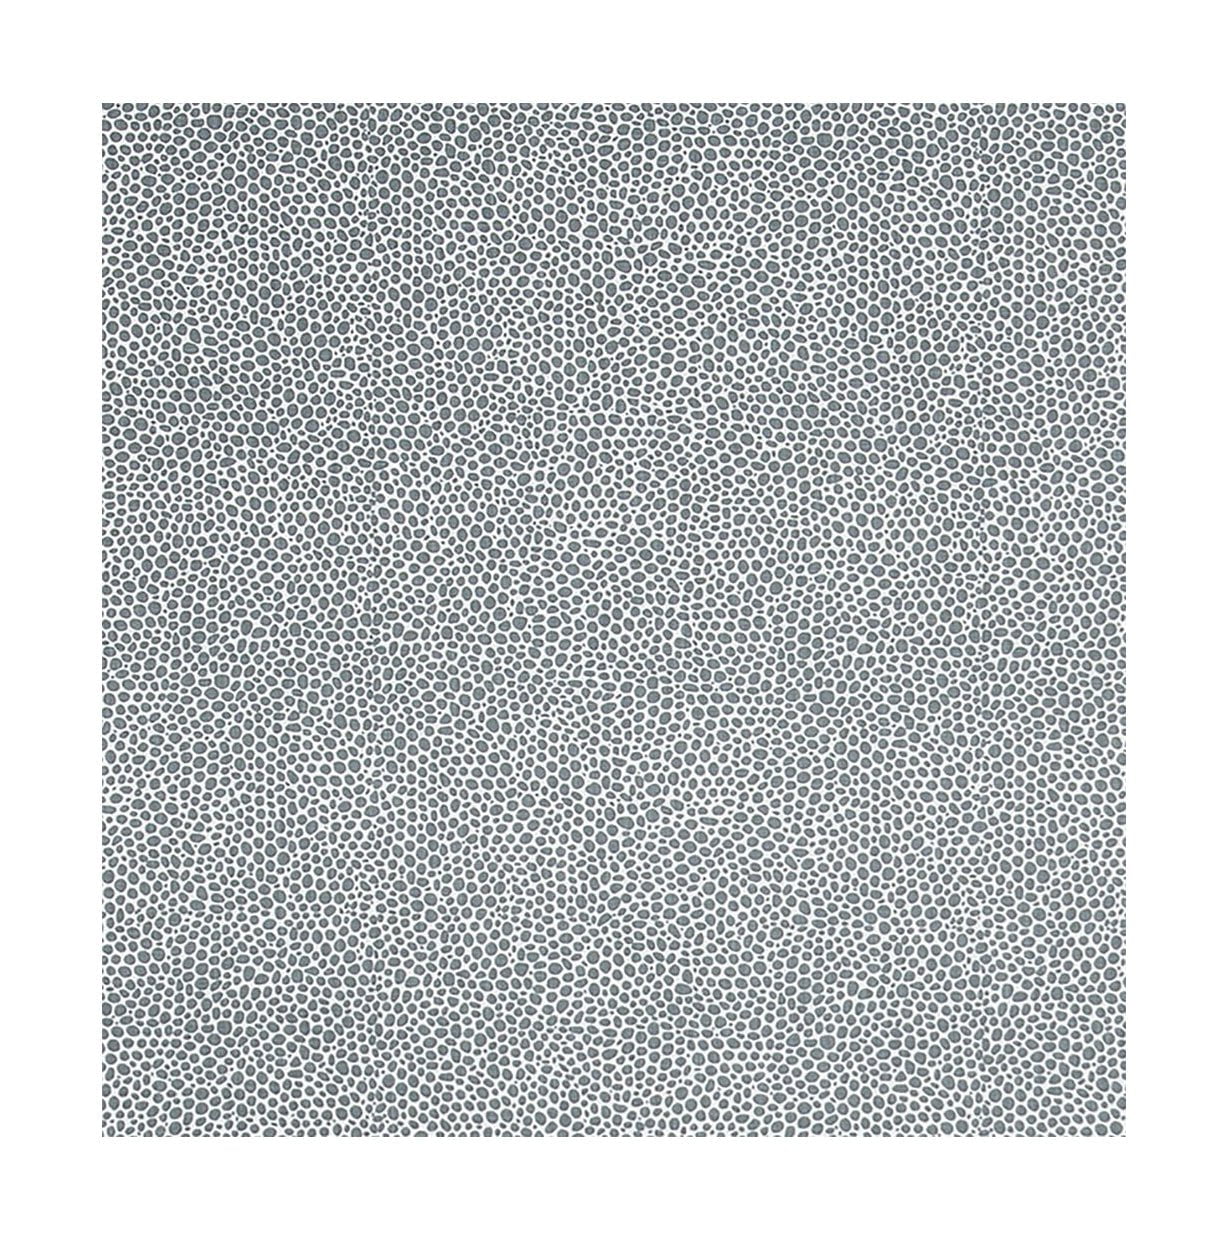 Spira Dotte Ctc Fabric With Acrylic Width 145 Cm (Price Per Meter), Smoke Blue